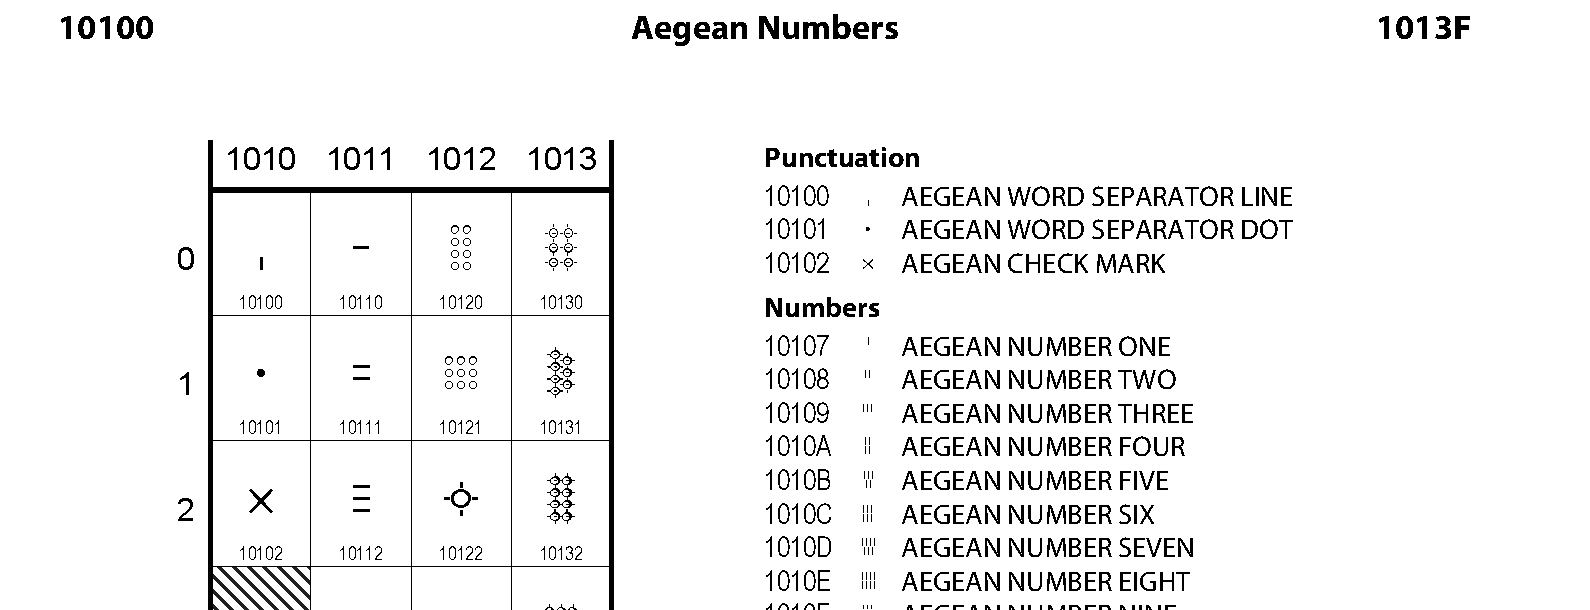 Unicode - Aegean Numbers